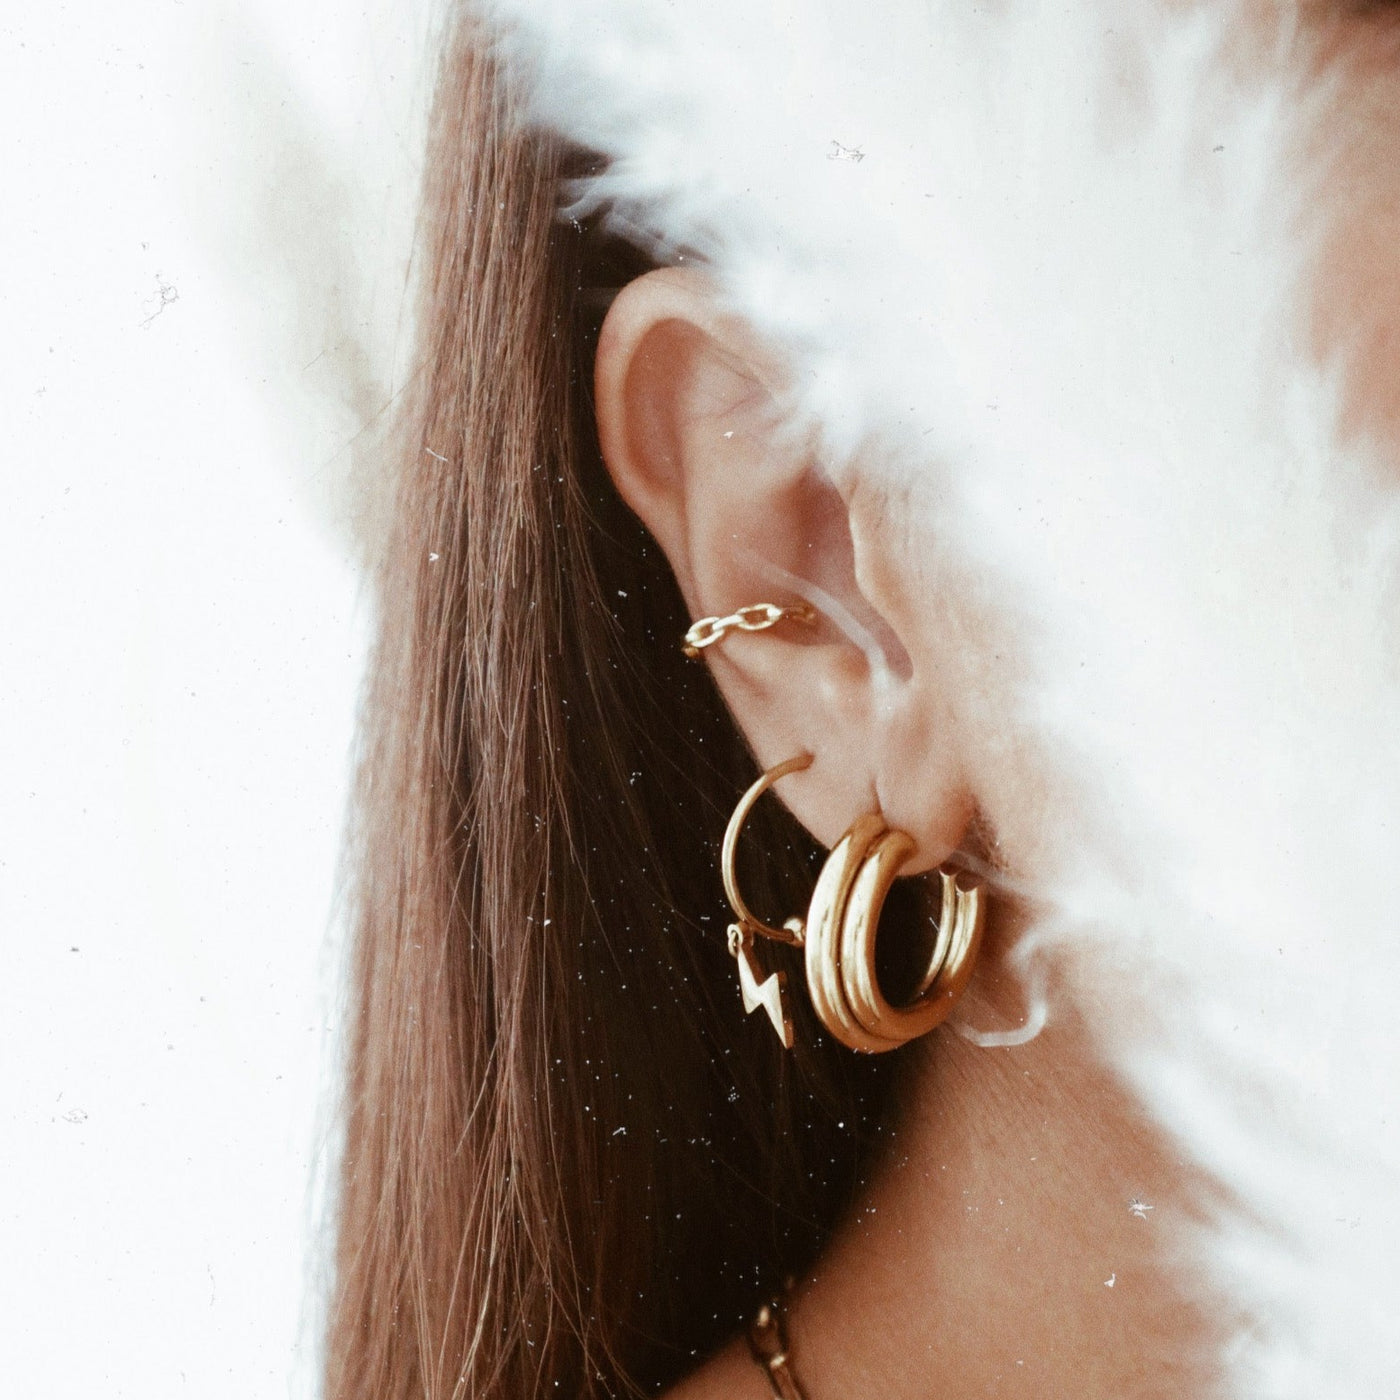 Double Curve Hoop Earrings Gold